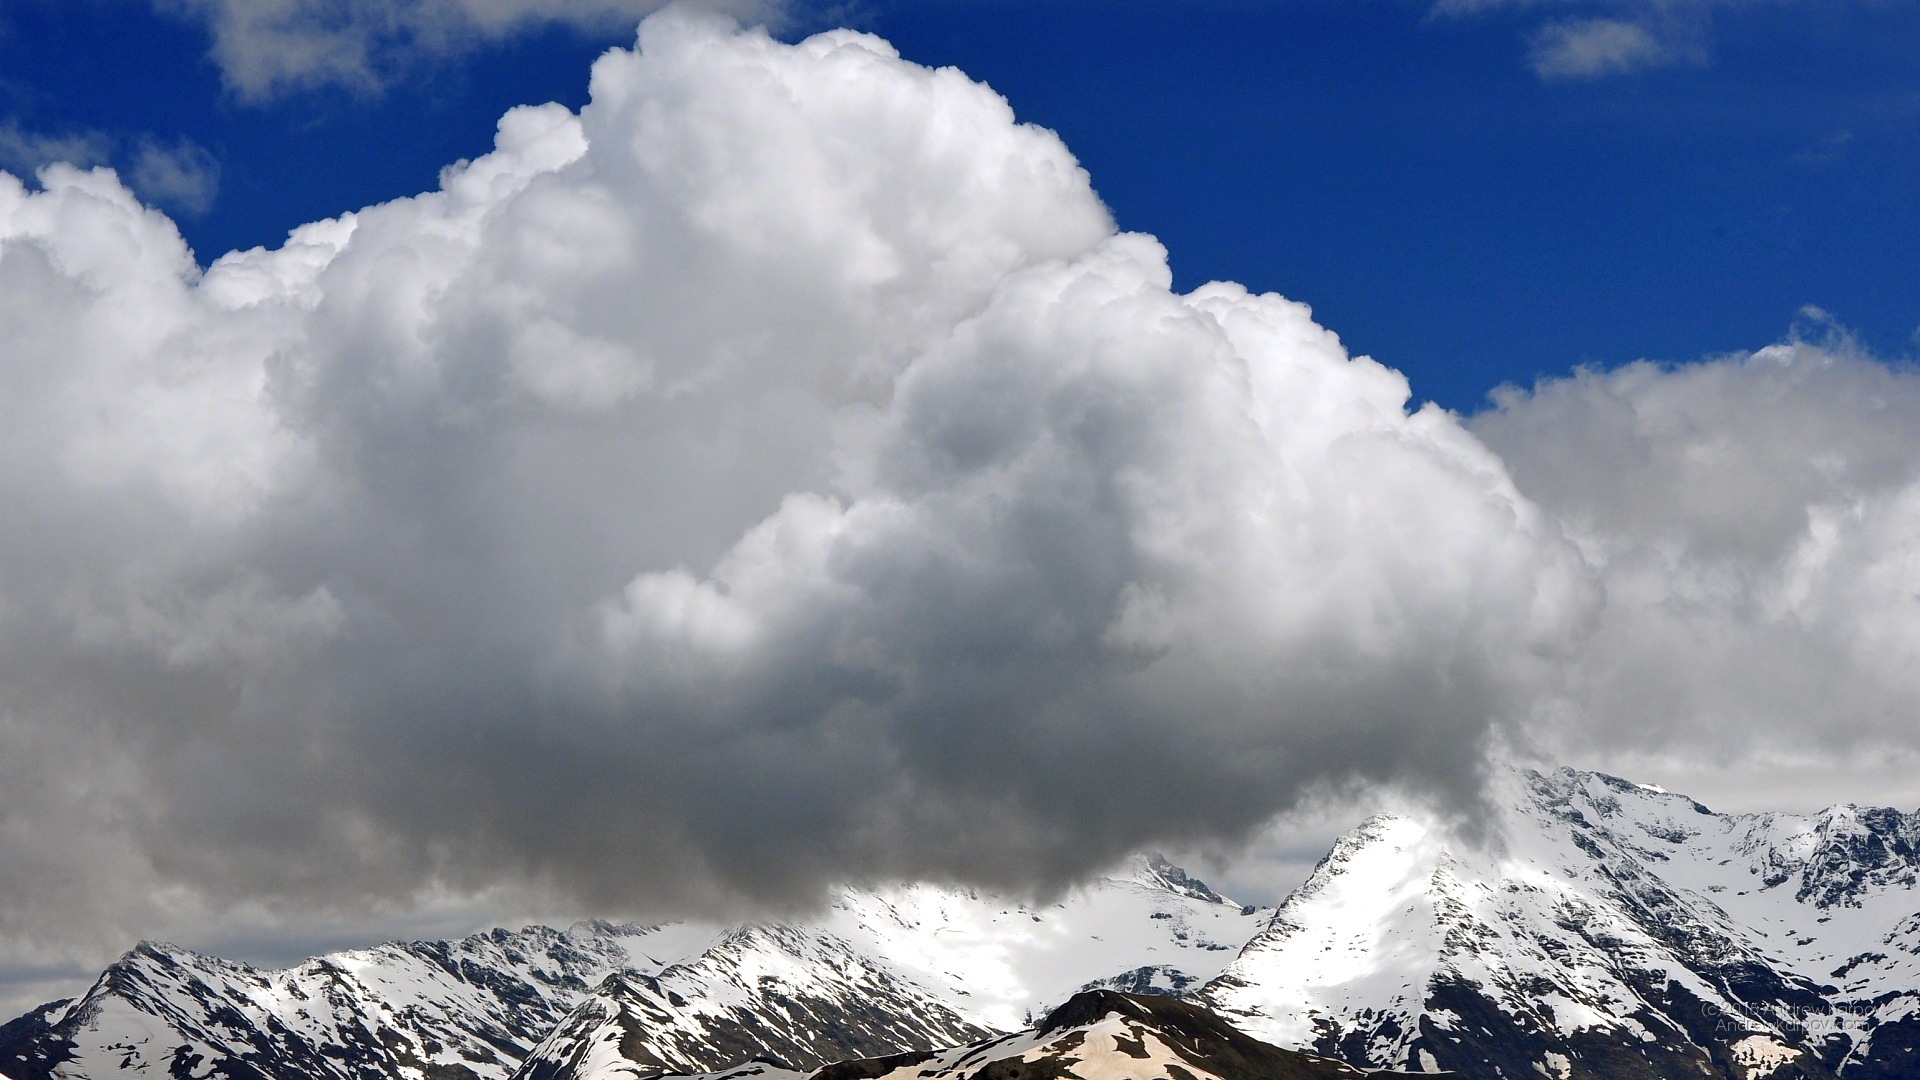 wallpaper untuk iphone 6,sky,cloud,cumulus,mountainous landforms,mountain